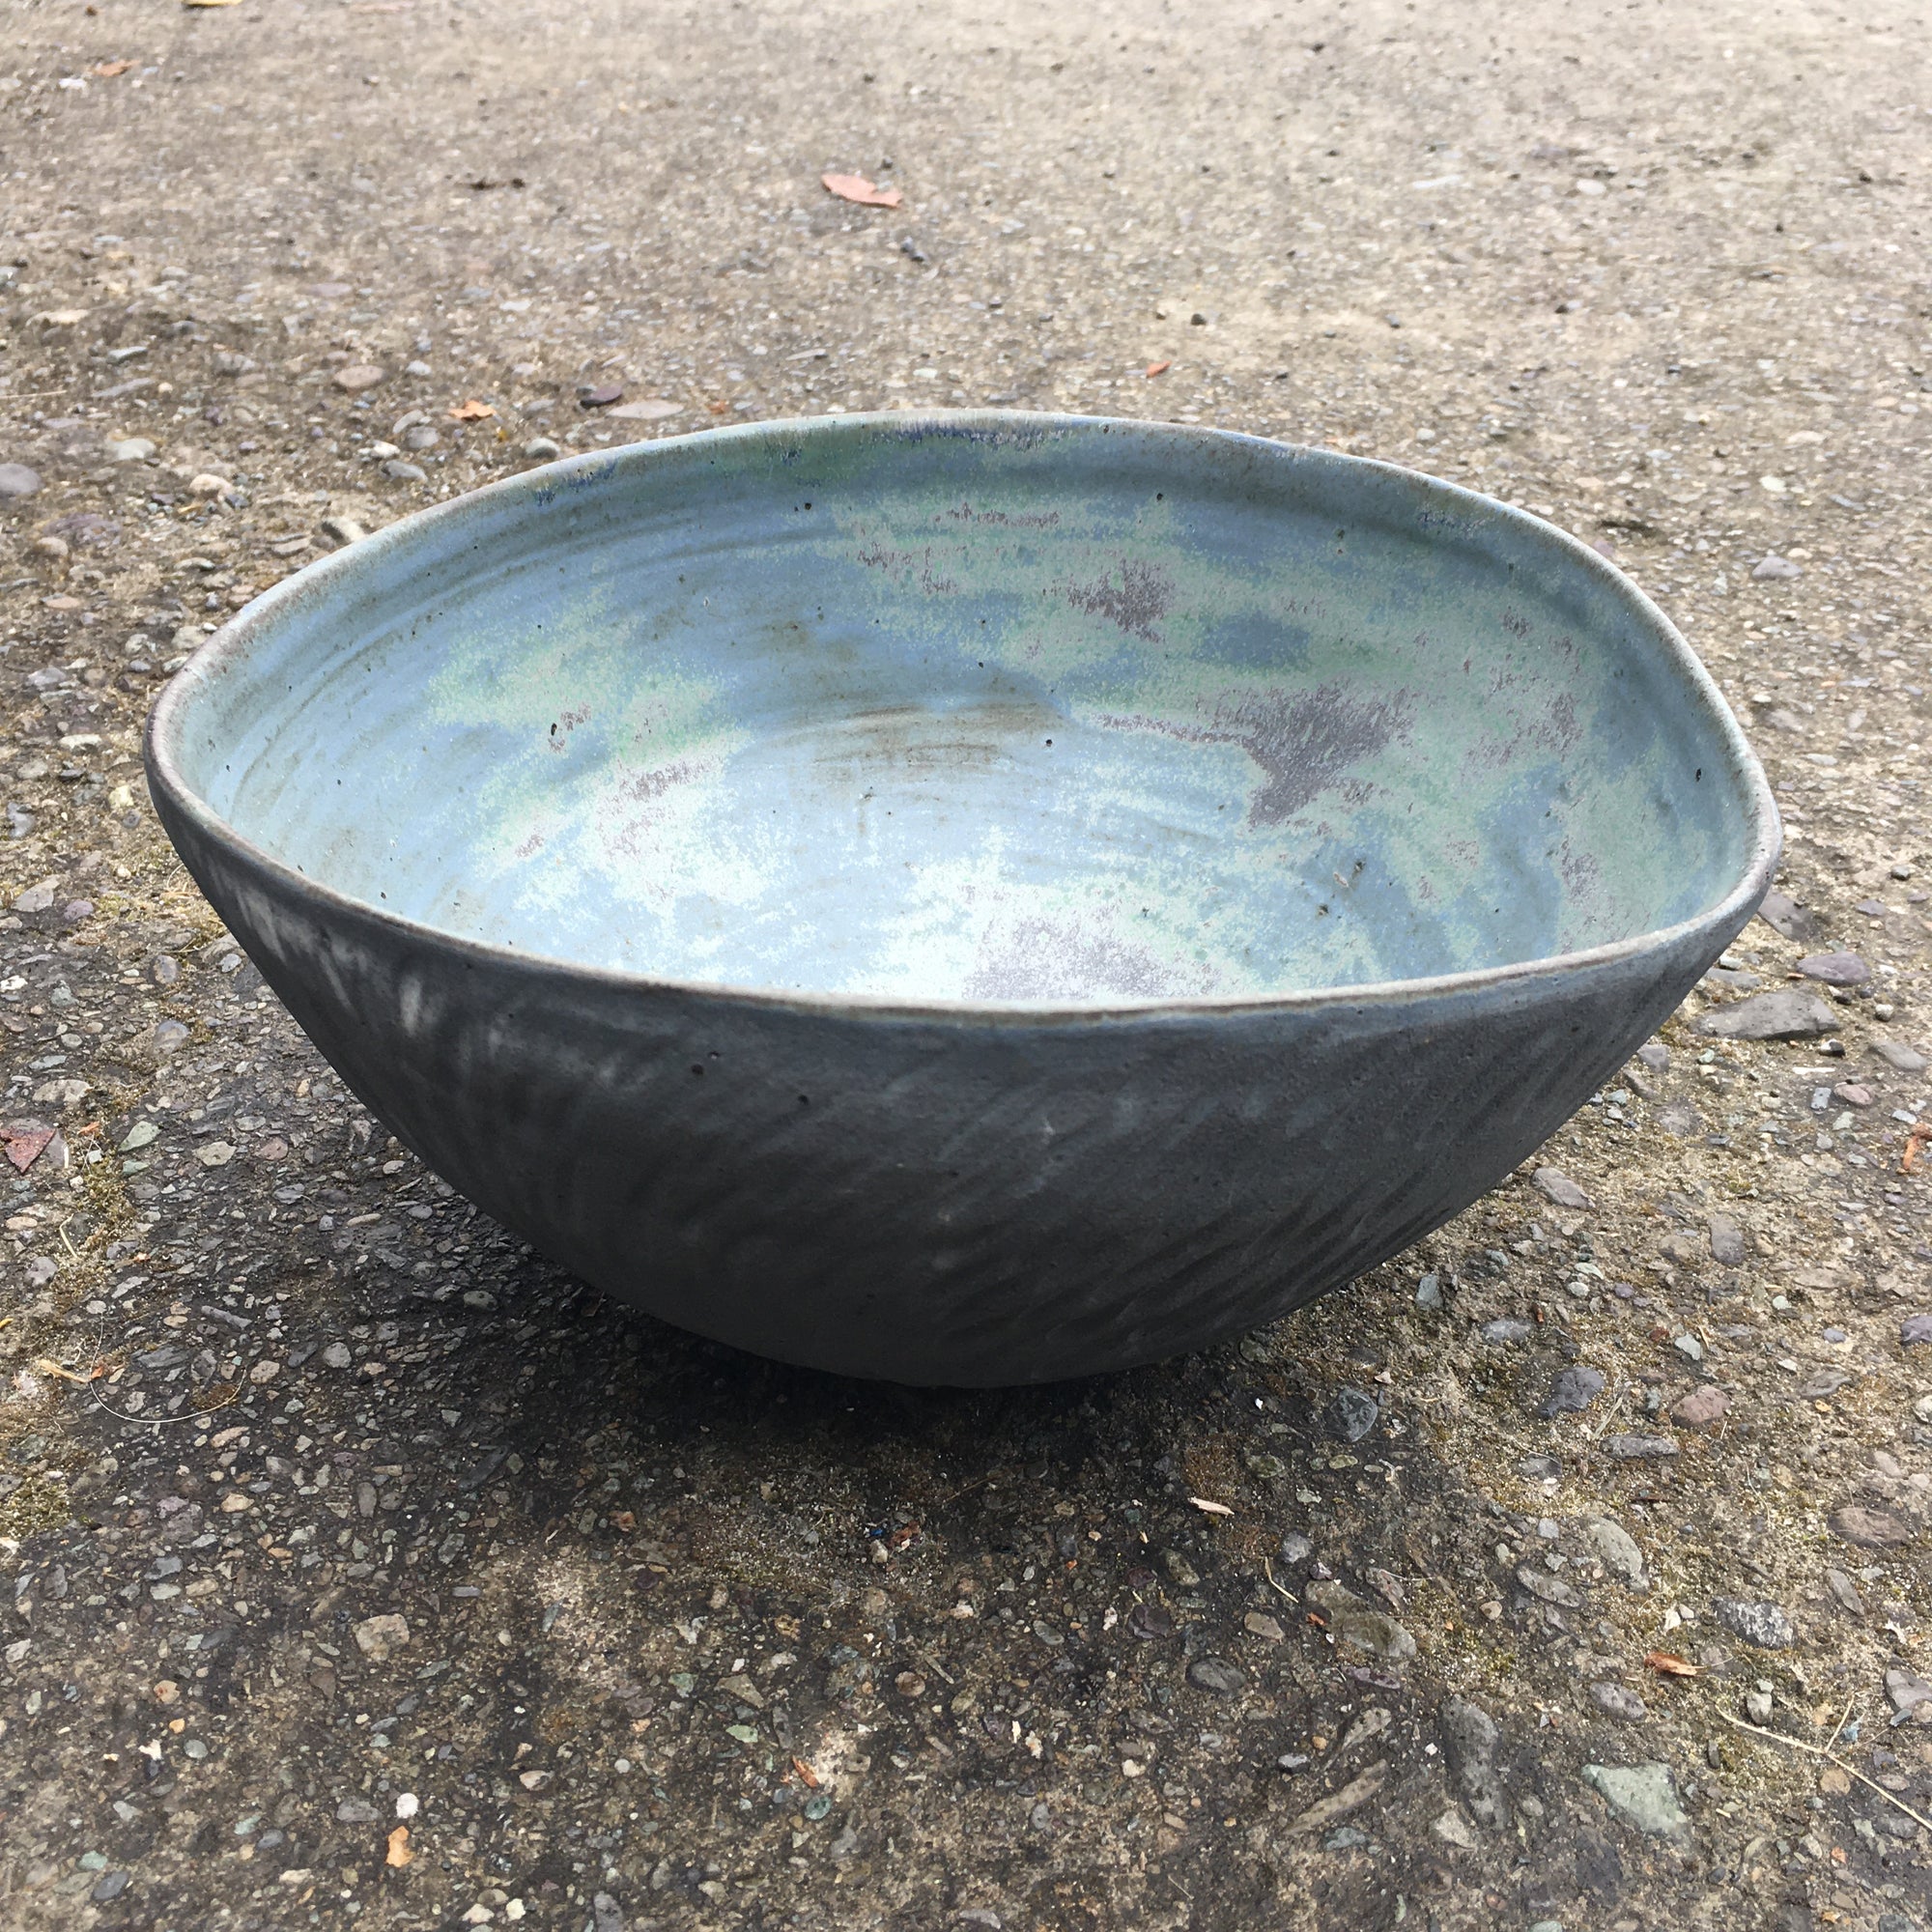 Large Grey/Blue Bowl